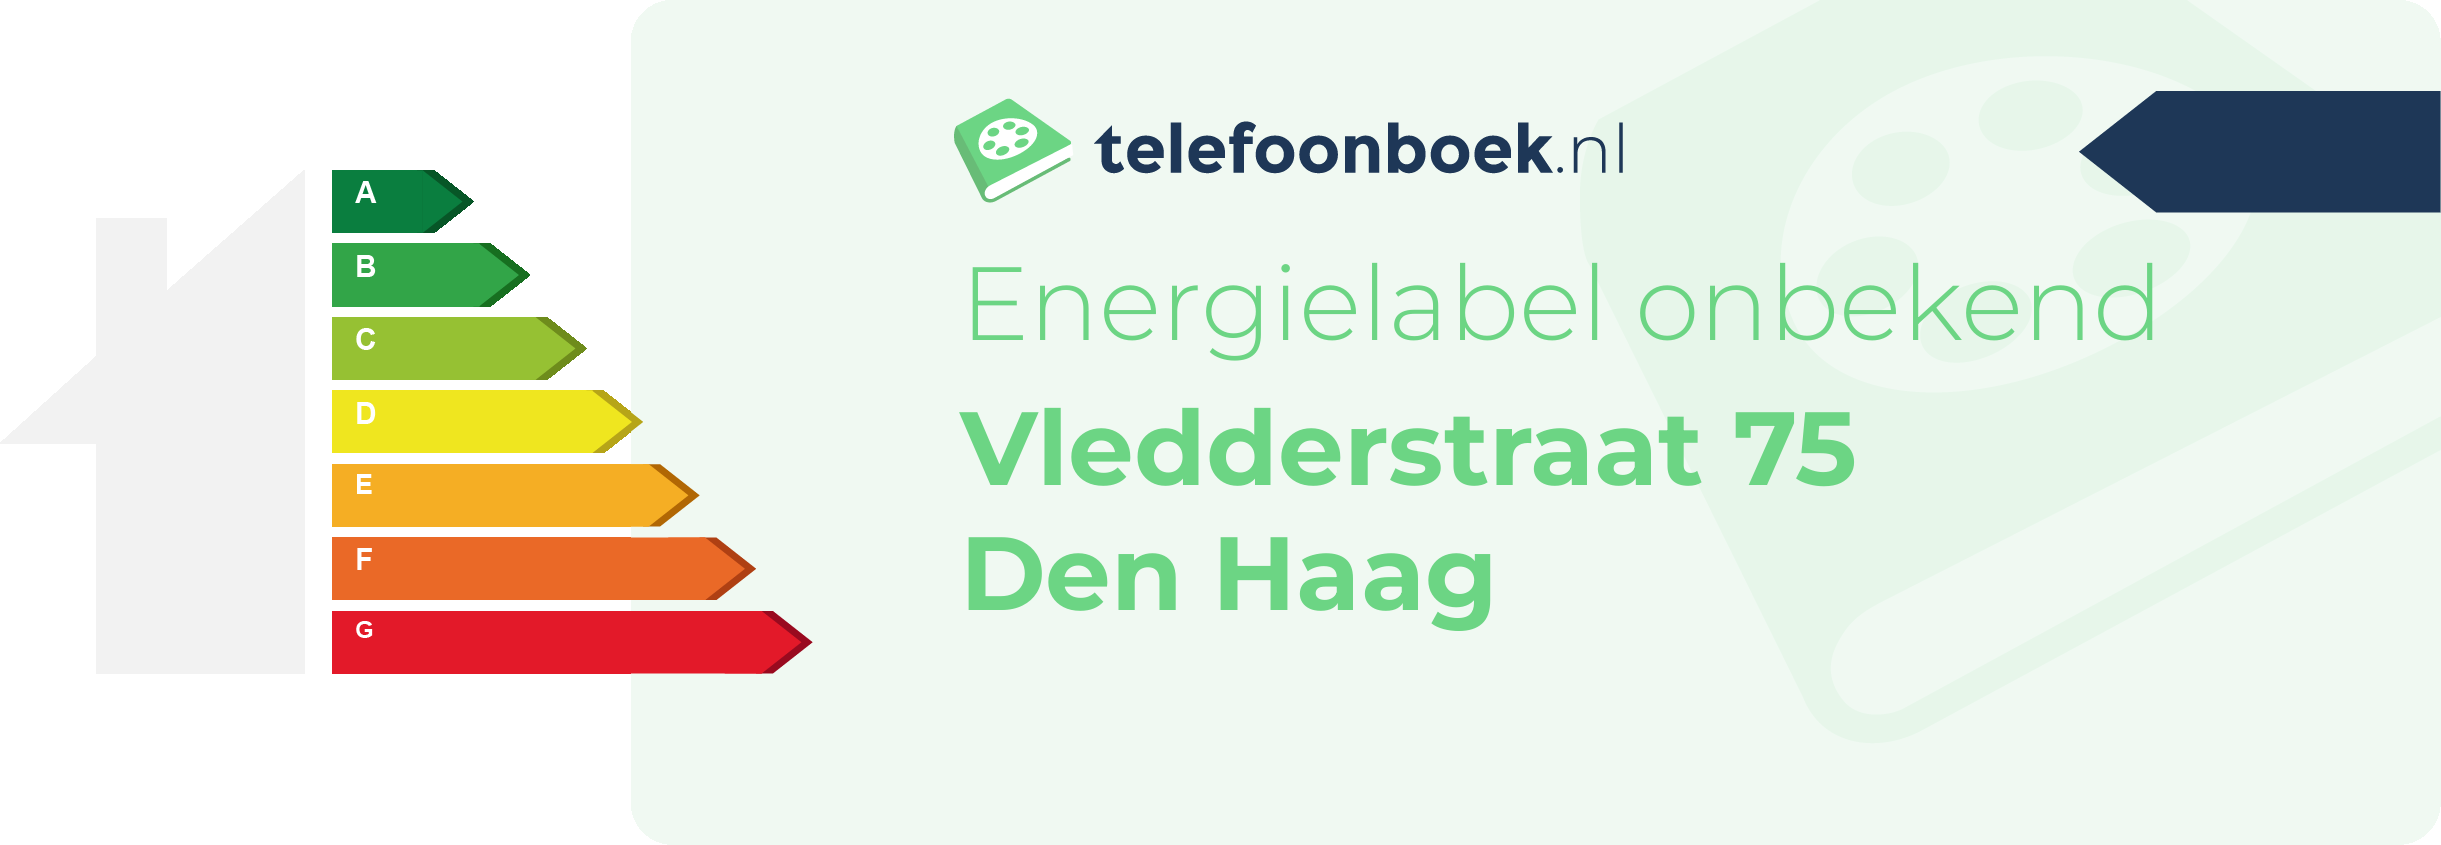 Energielabel Vledderstraat 75 Den Haag